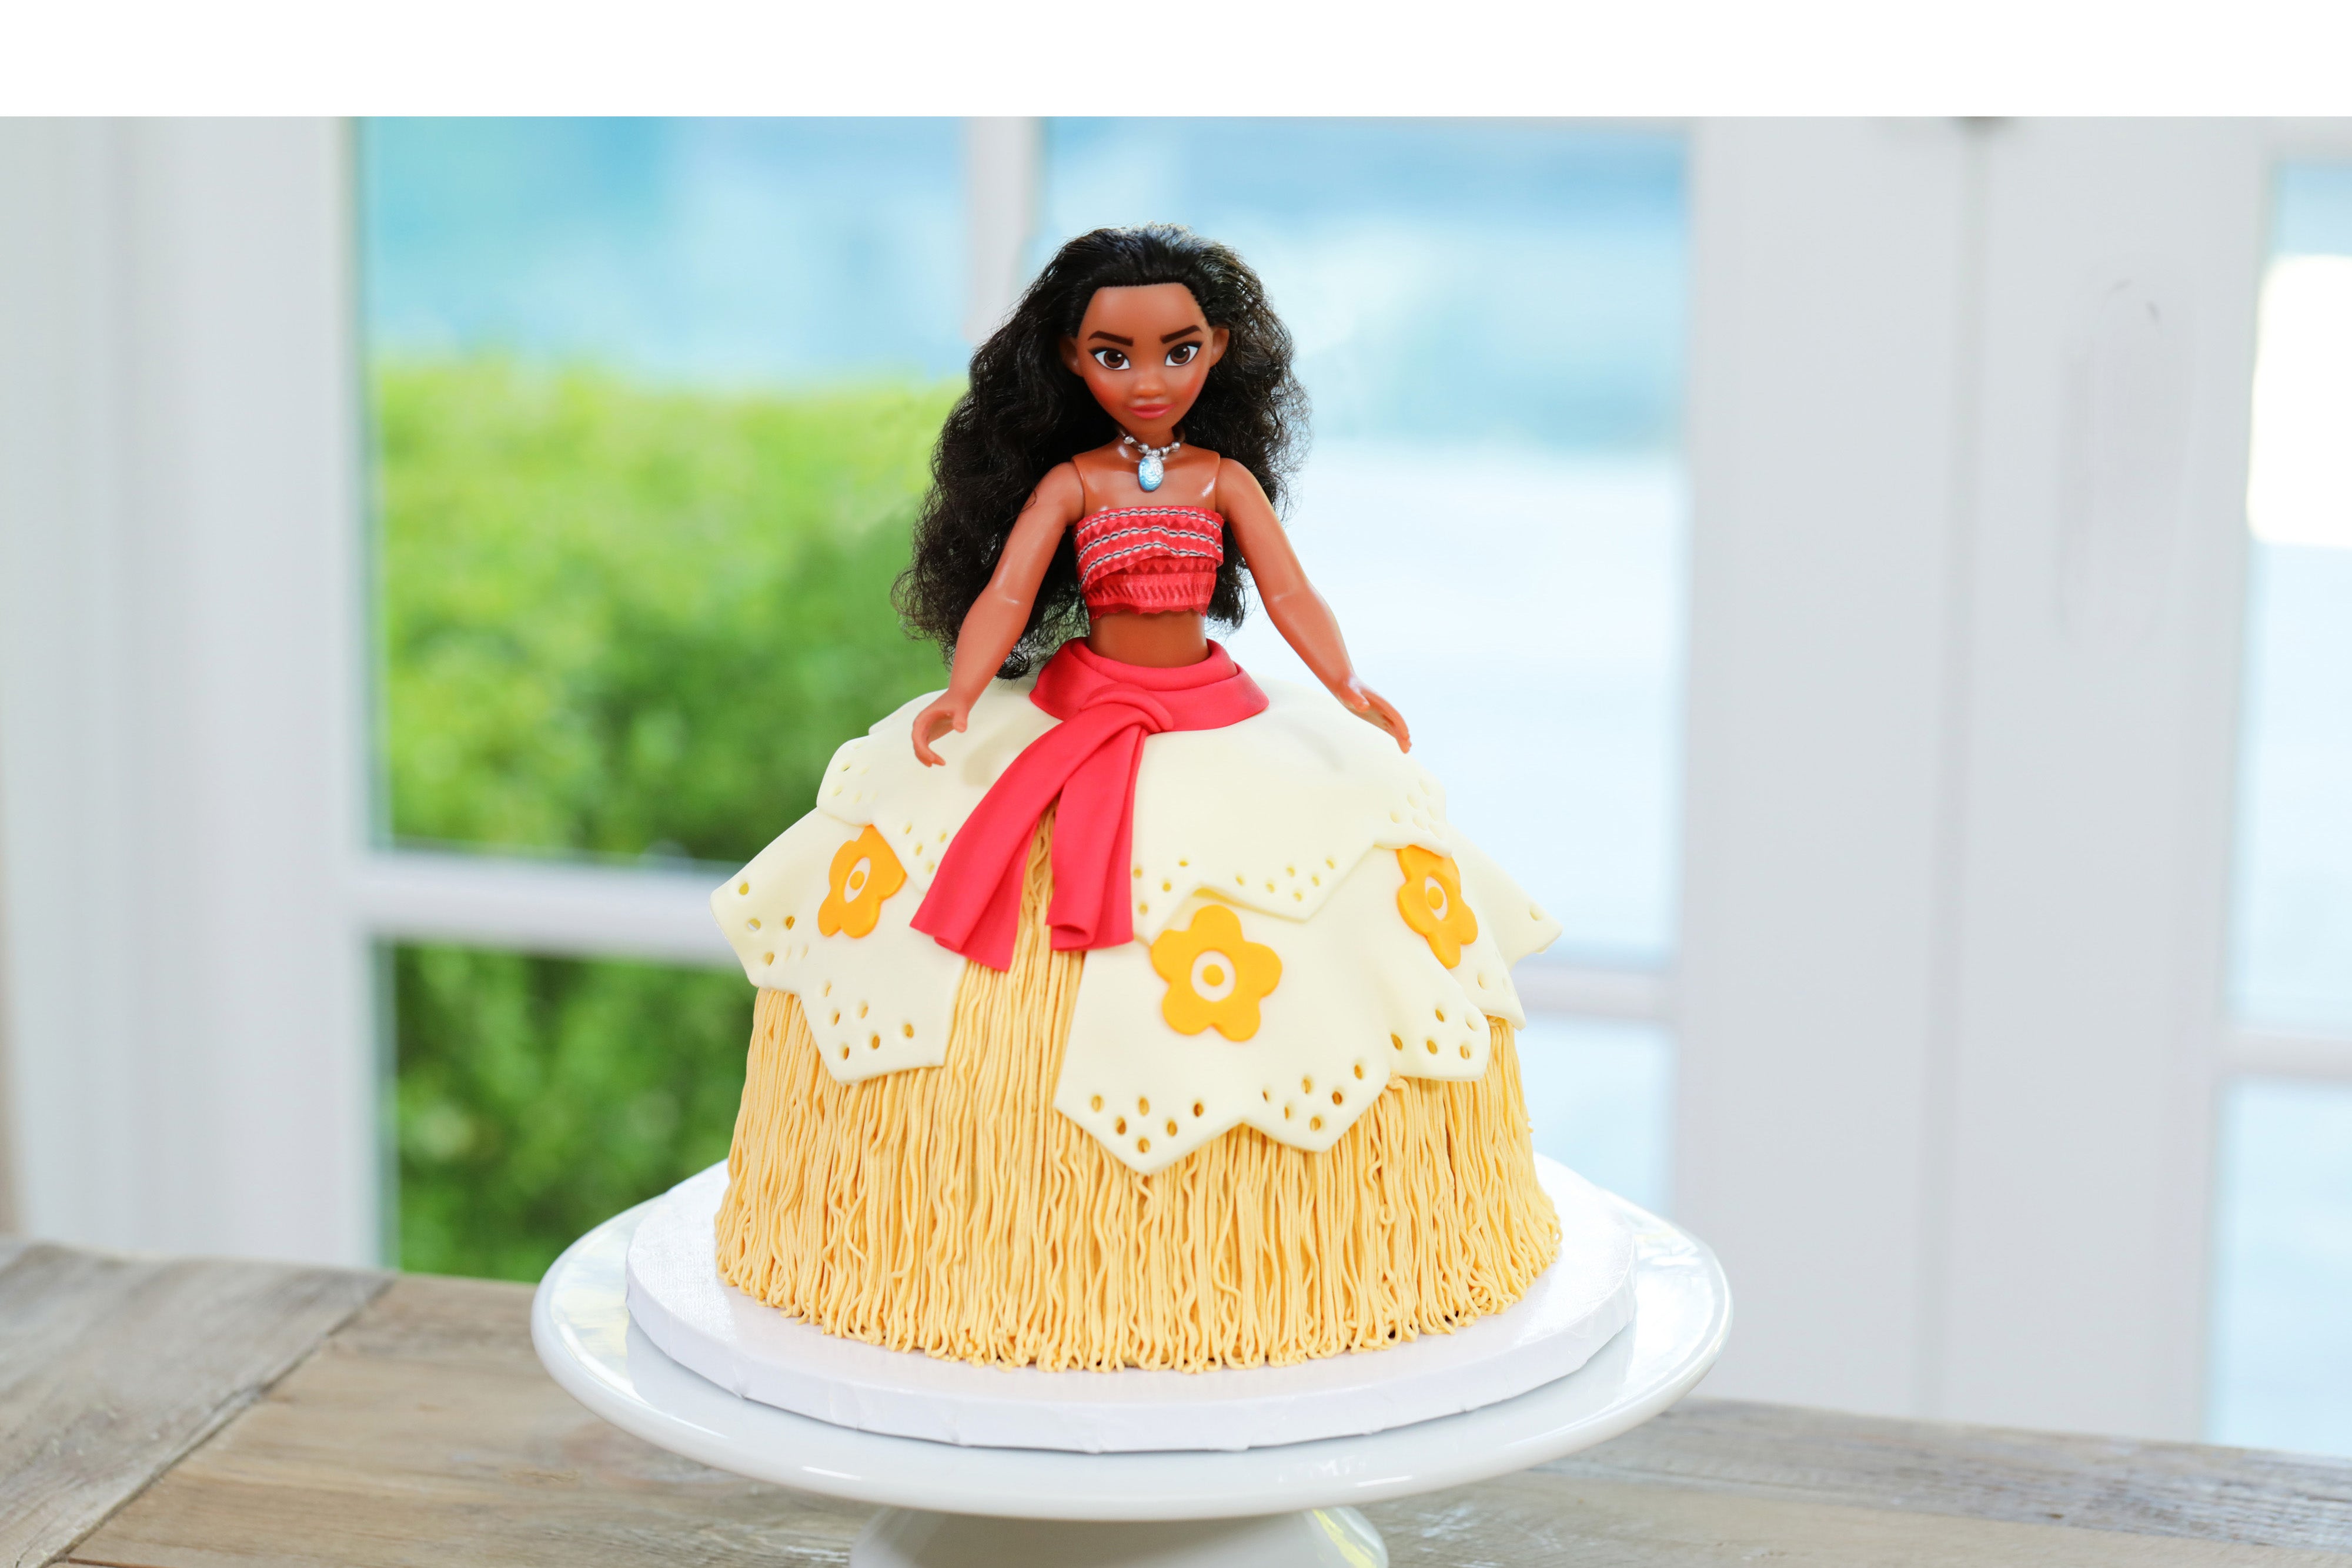 Moana Princess Cake – Rosanna Pansino